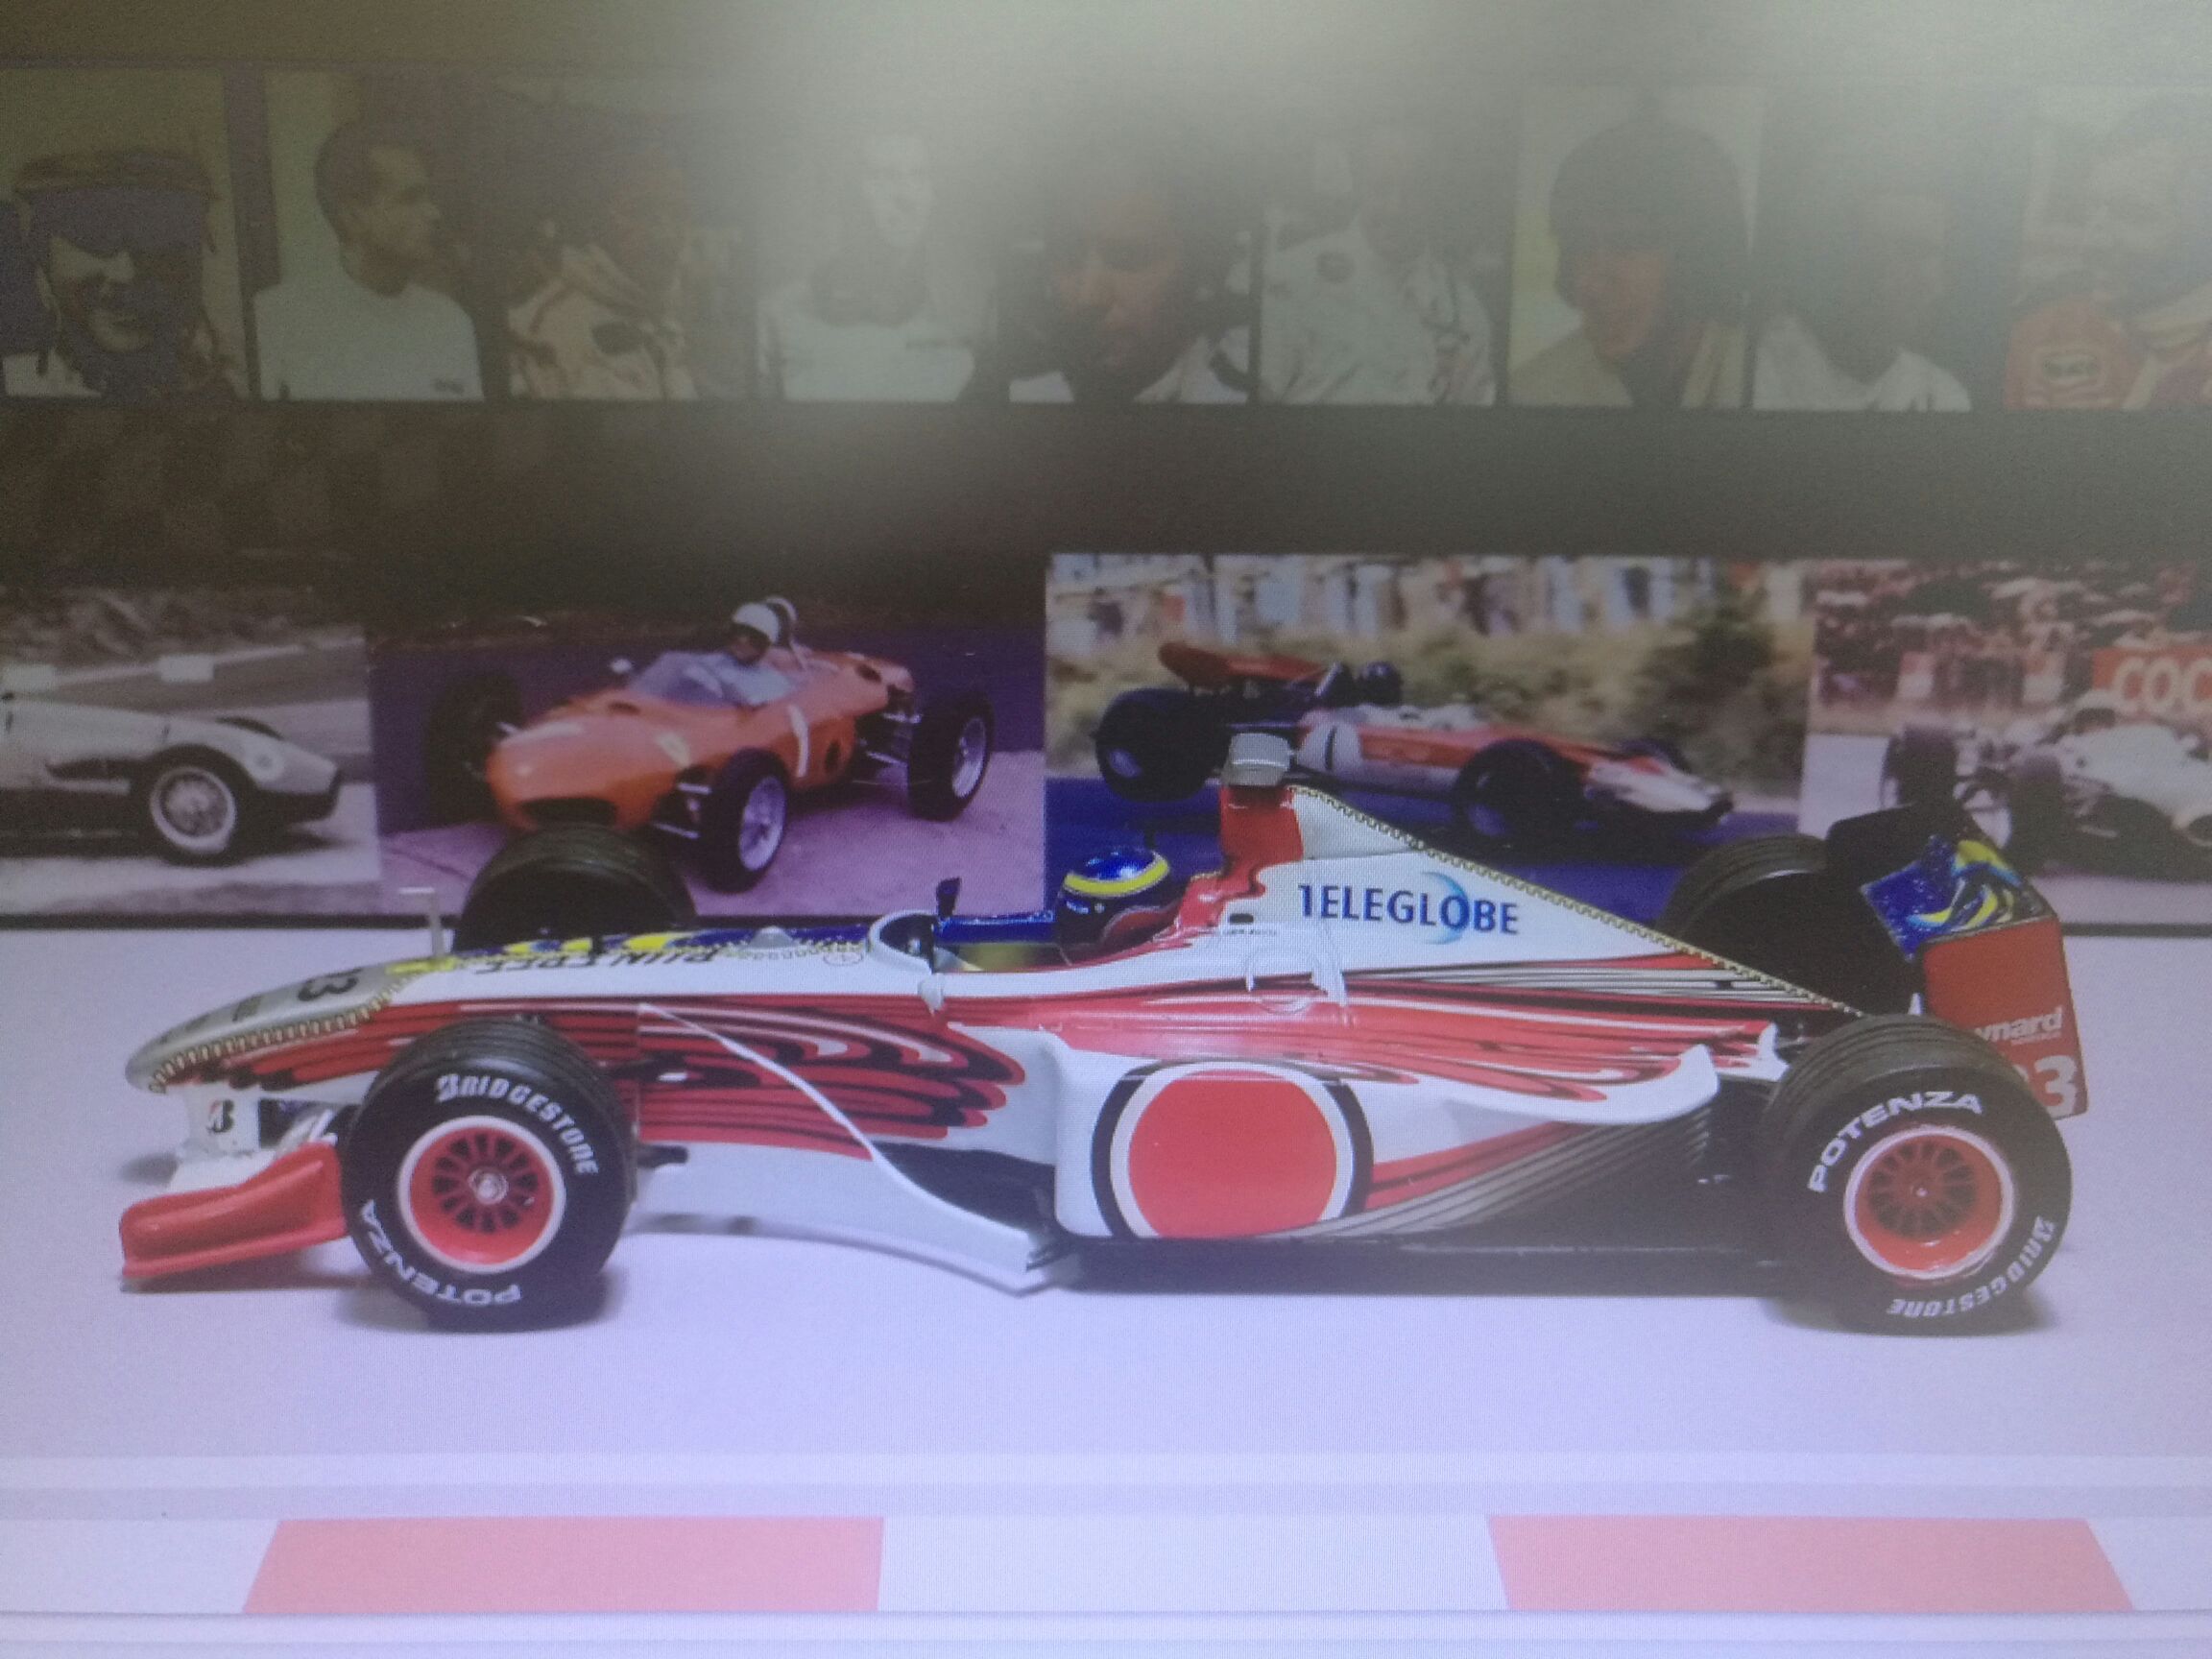 Bar-01 - Formula 1 toy car collectible - Main Image 1